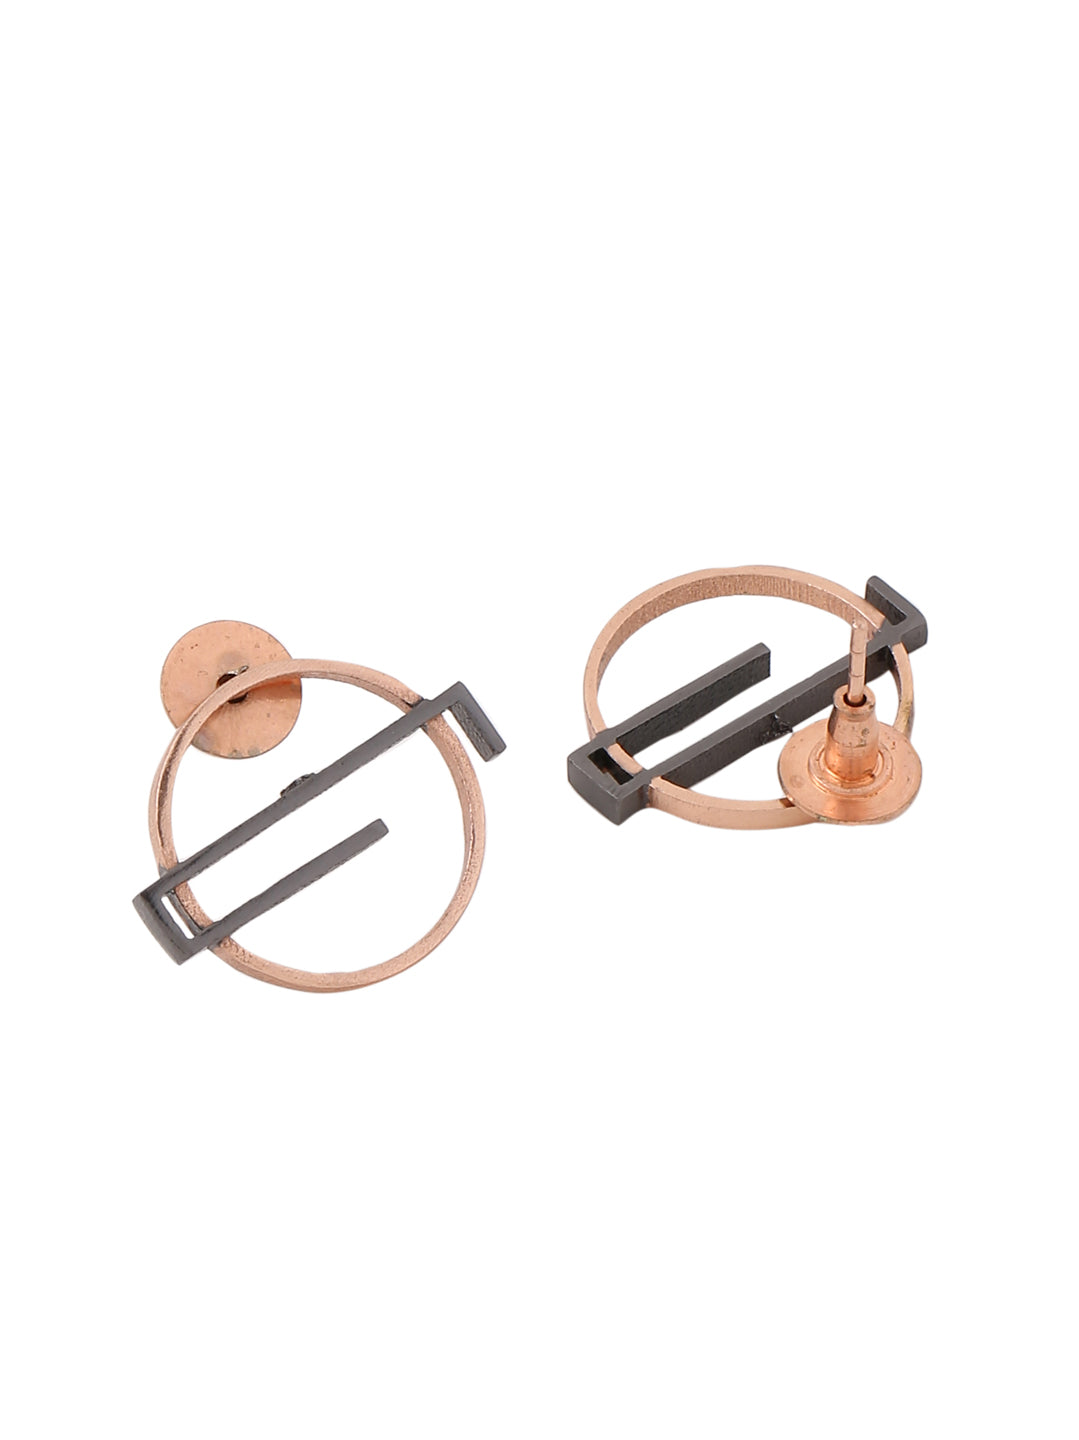 Curio Earrings - Rose Gold/Black